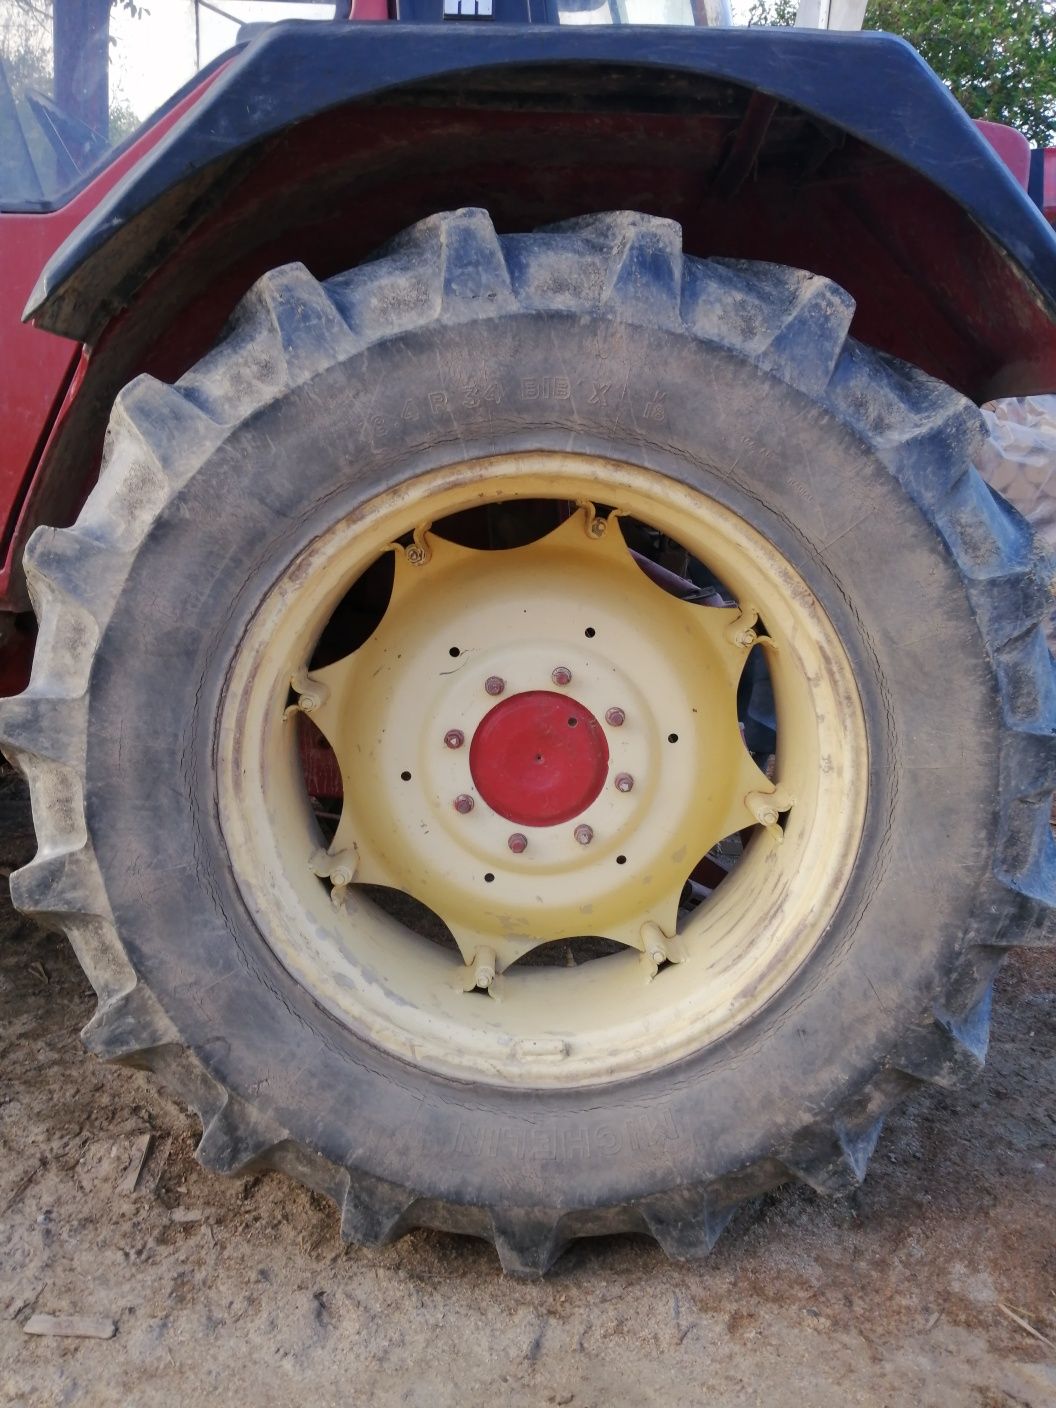 Anvelopa tractor Michelin 18.4 R34